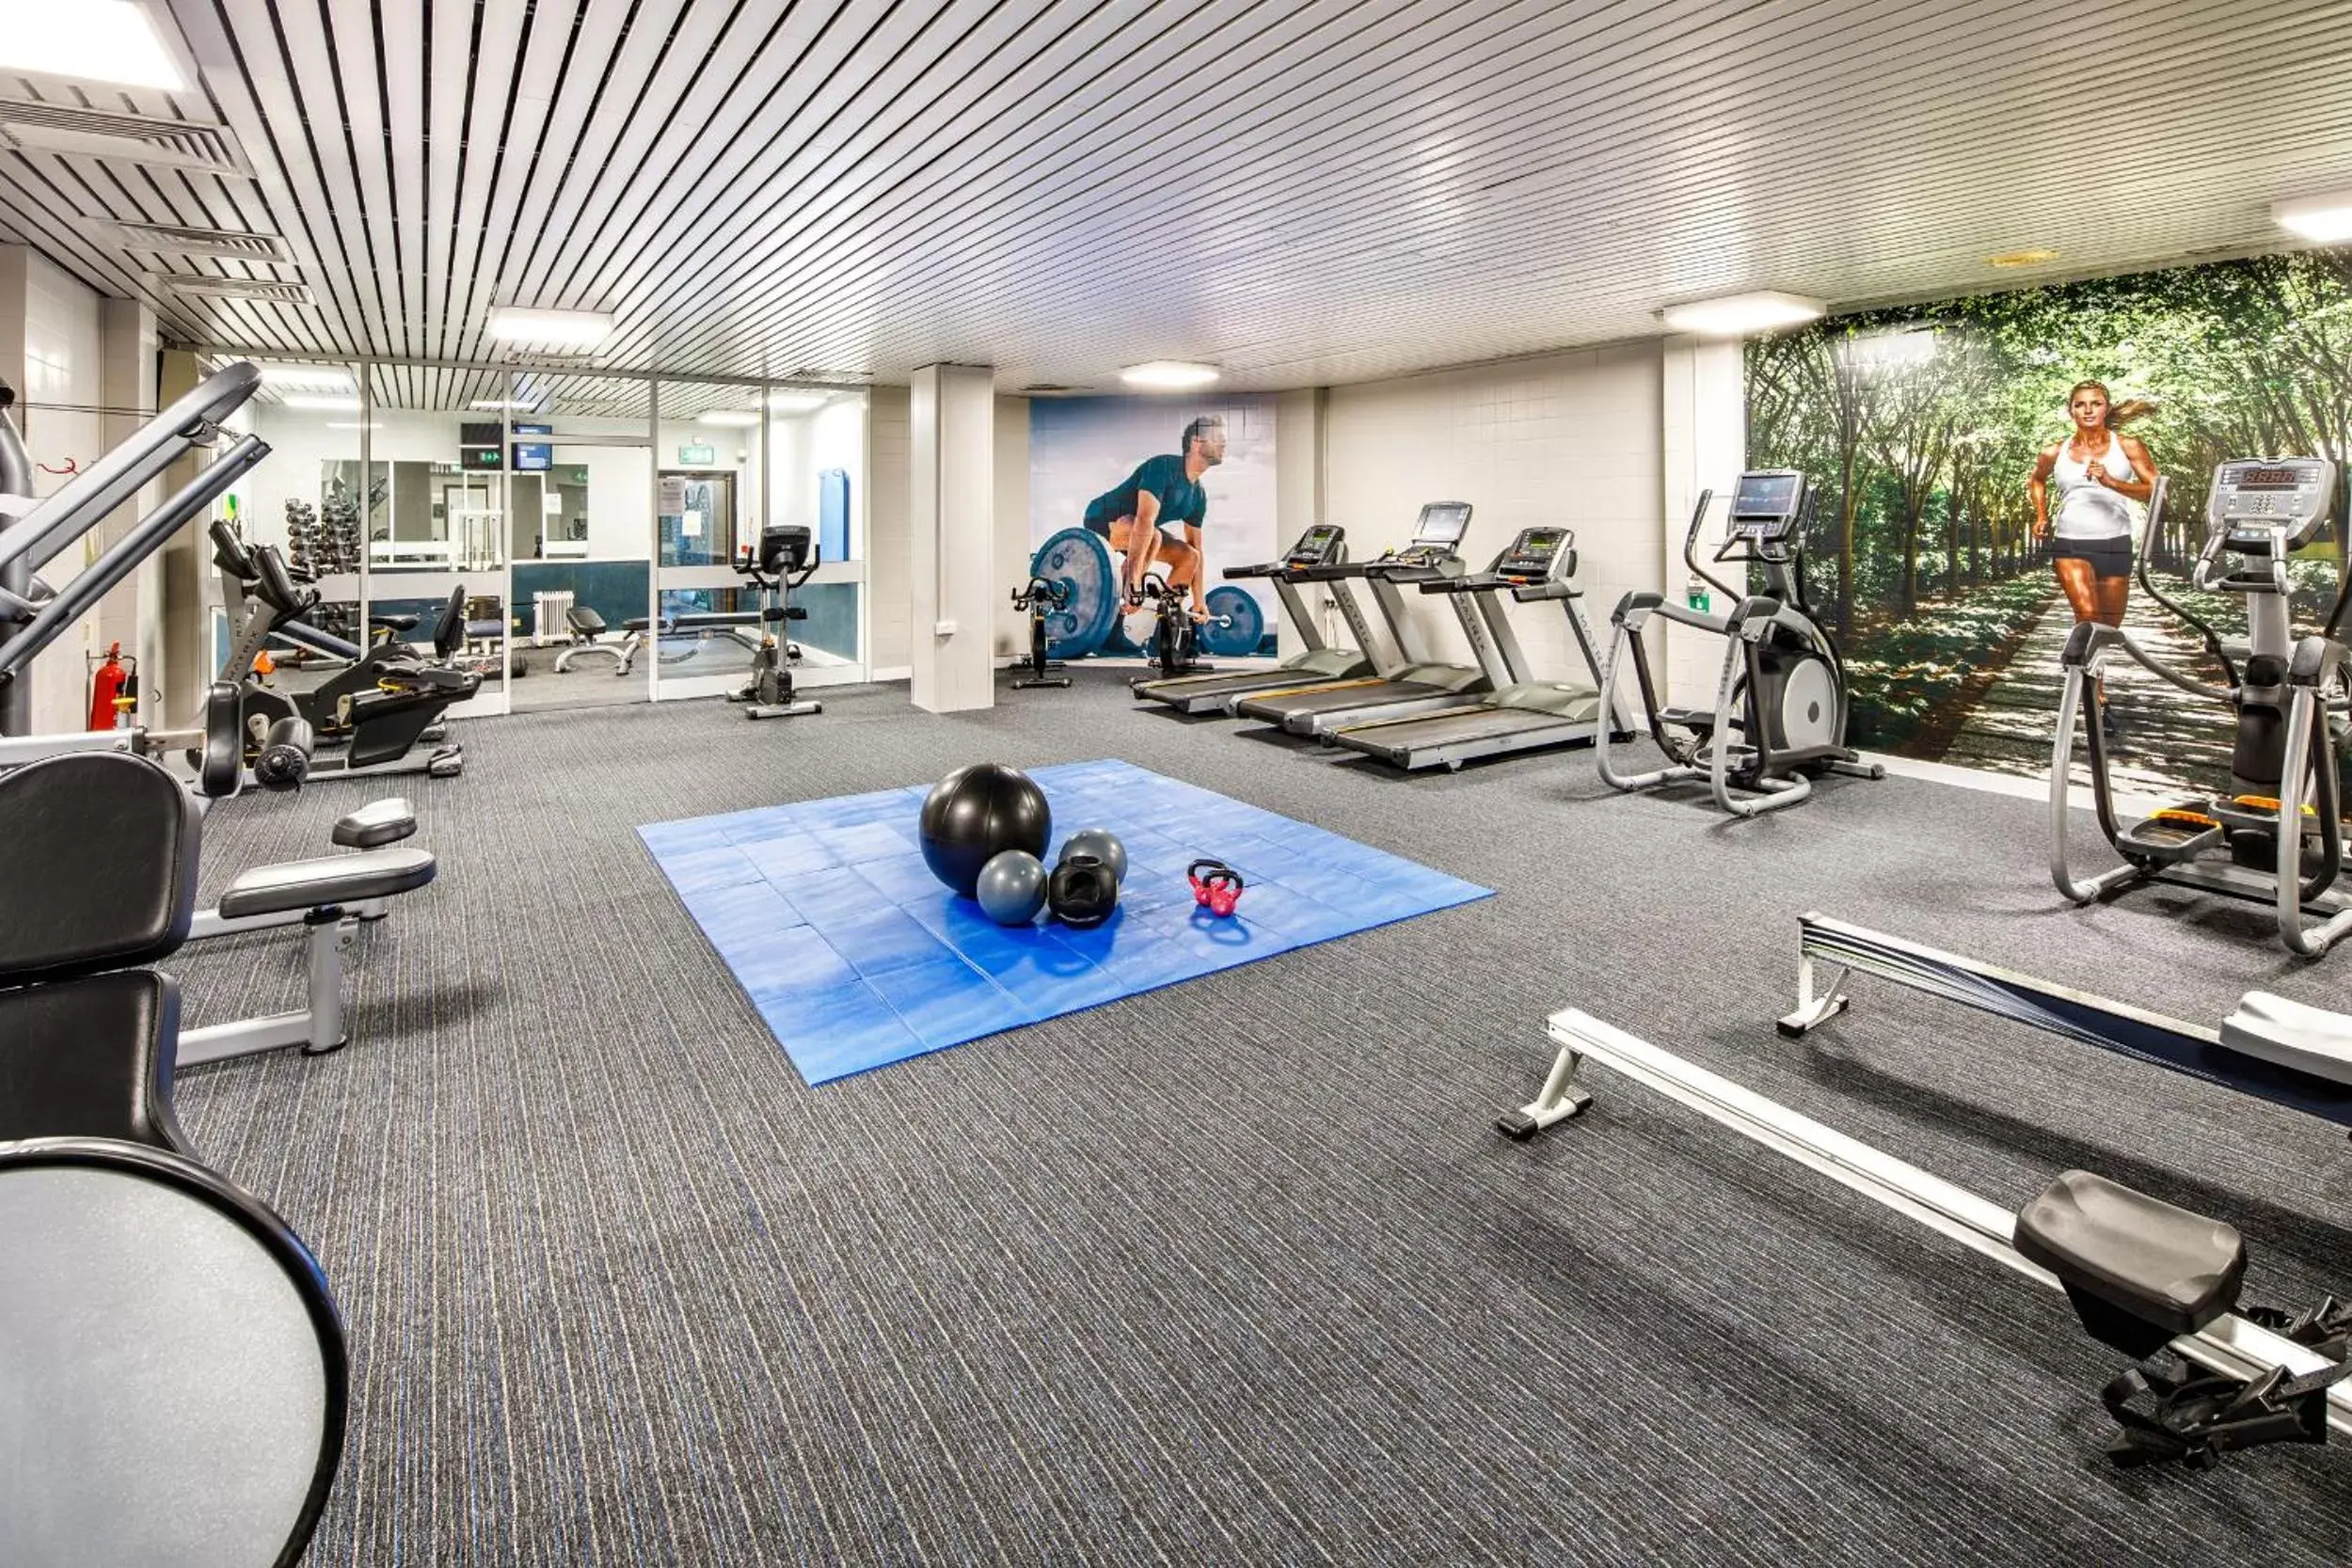 Fitness centre/facilities, Fitness Center/Facilities in Mercure Swansea Hotel